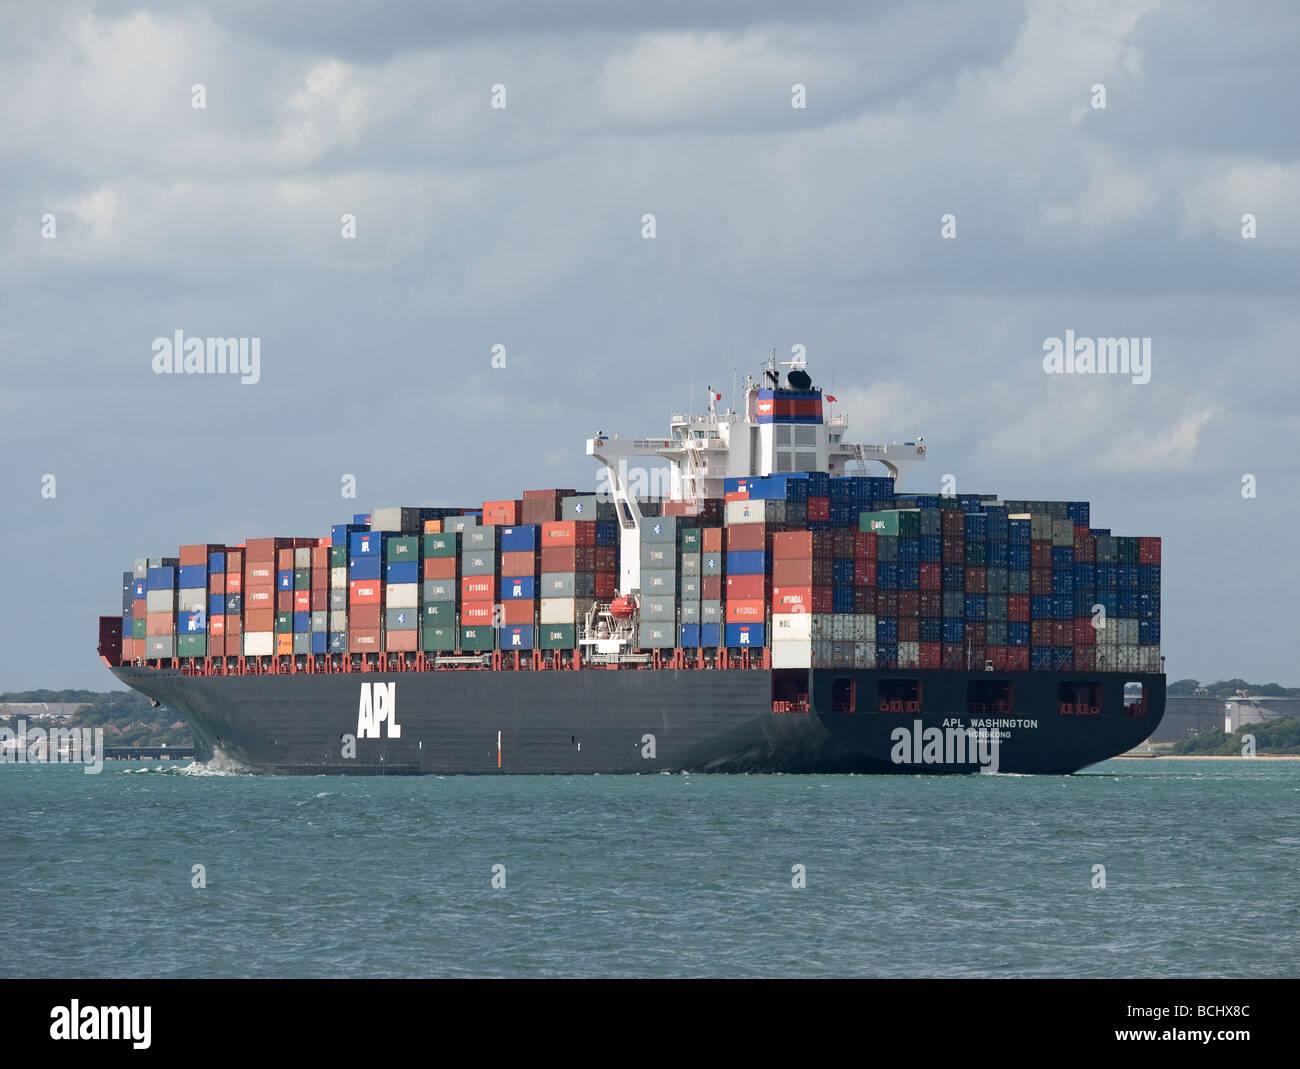 Nave portacontainer APL Washington arrivando a Southampton Regno Unito Foto Stock